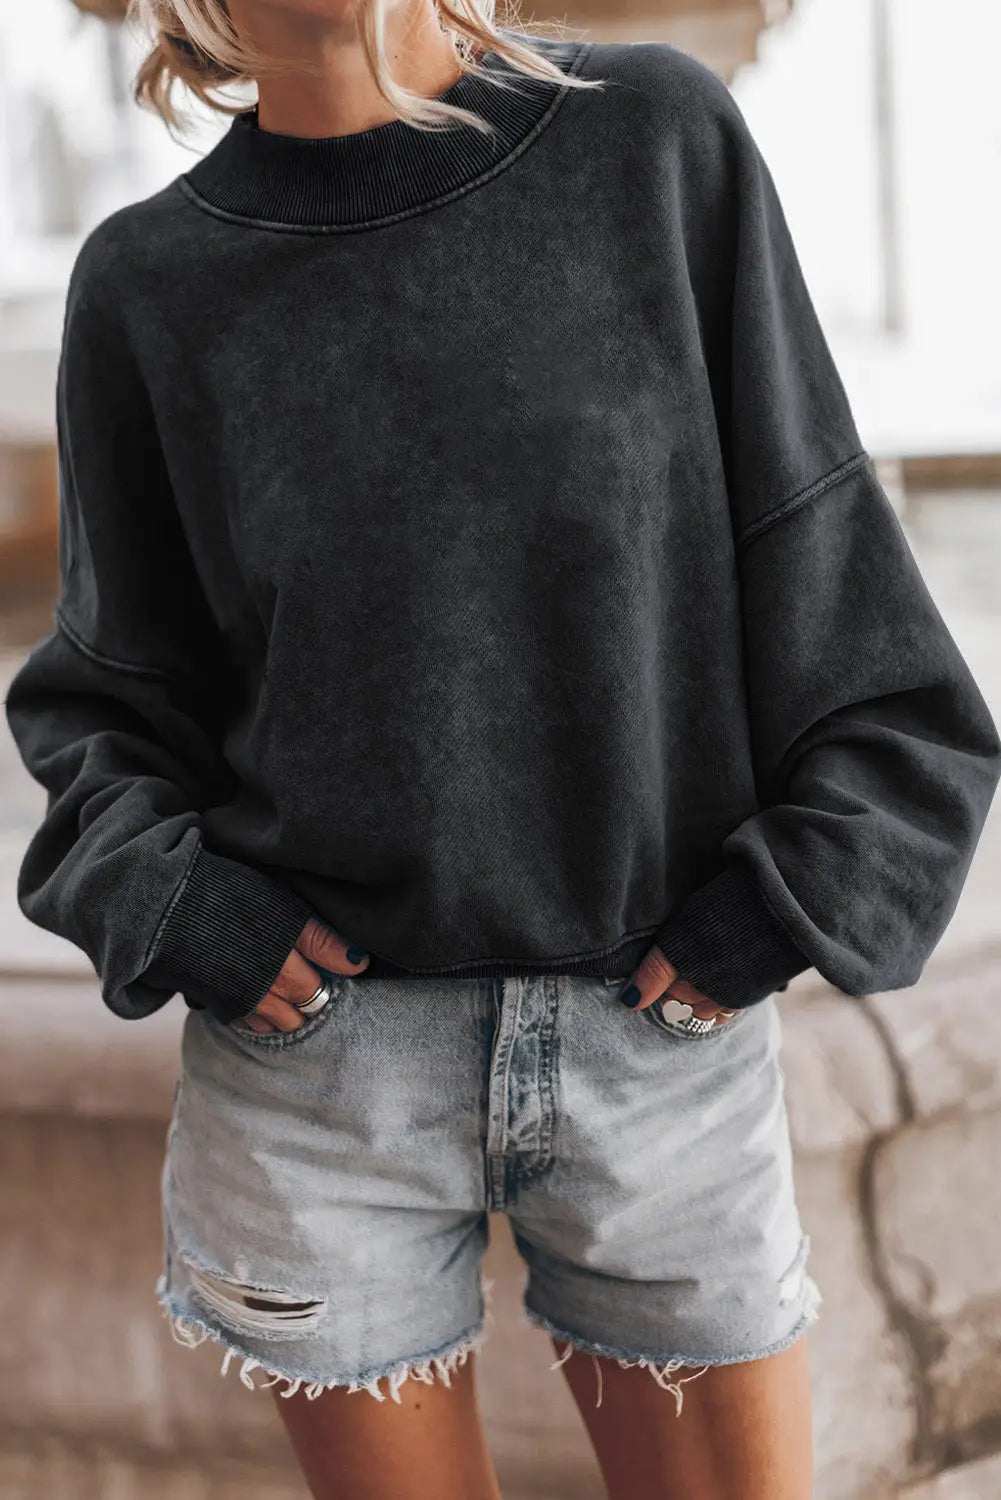 Brown drop shoulder crew neck pullover sweatshirt - black / s / 75% polyester + 25% cotton - tops